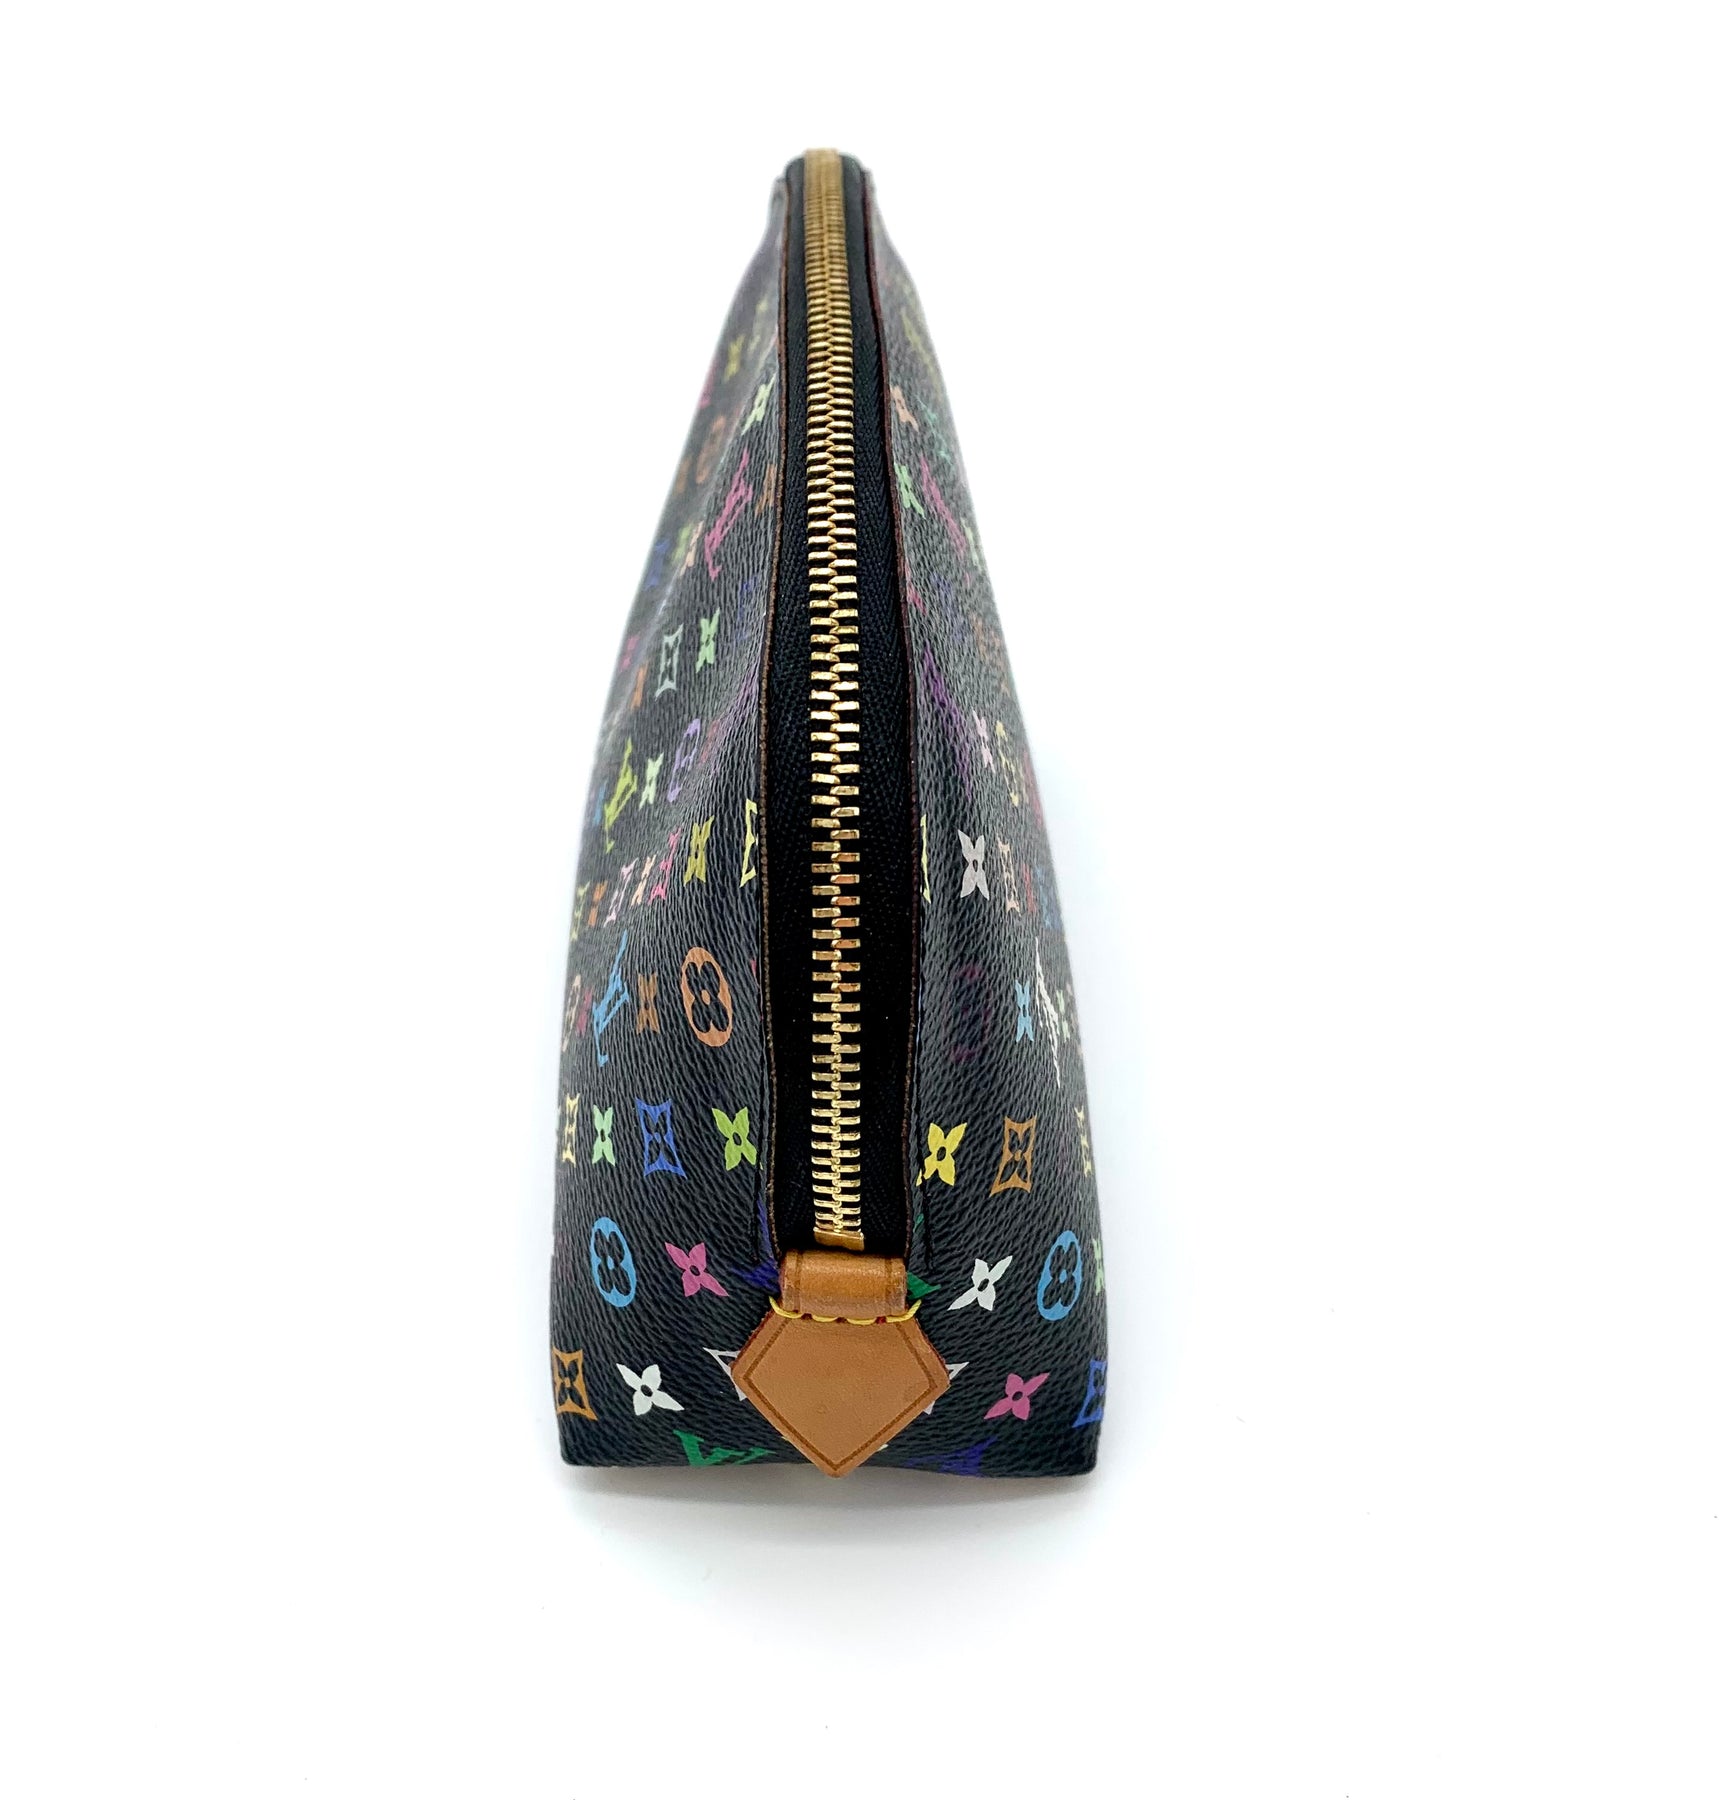 Louis Vuitton haul: multicolor cosmetic pouch and pallas chain! 